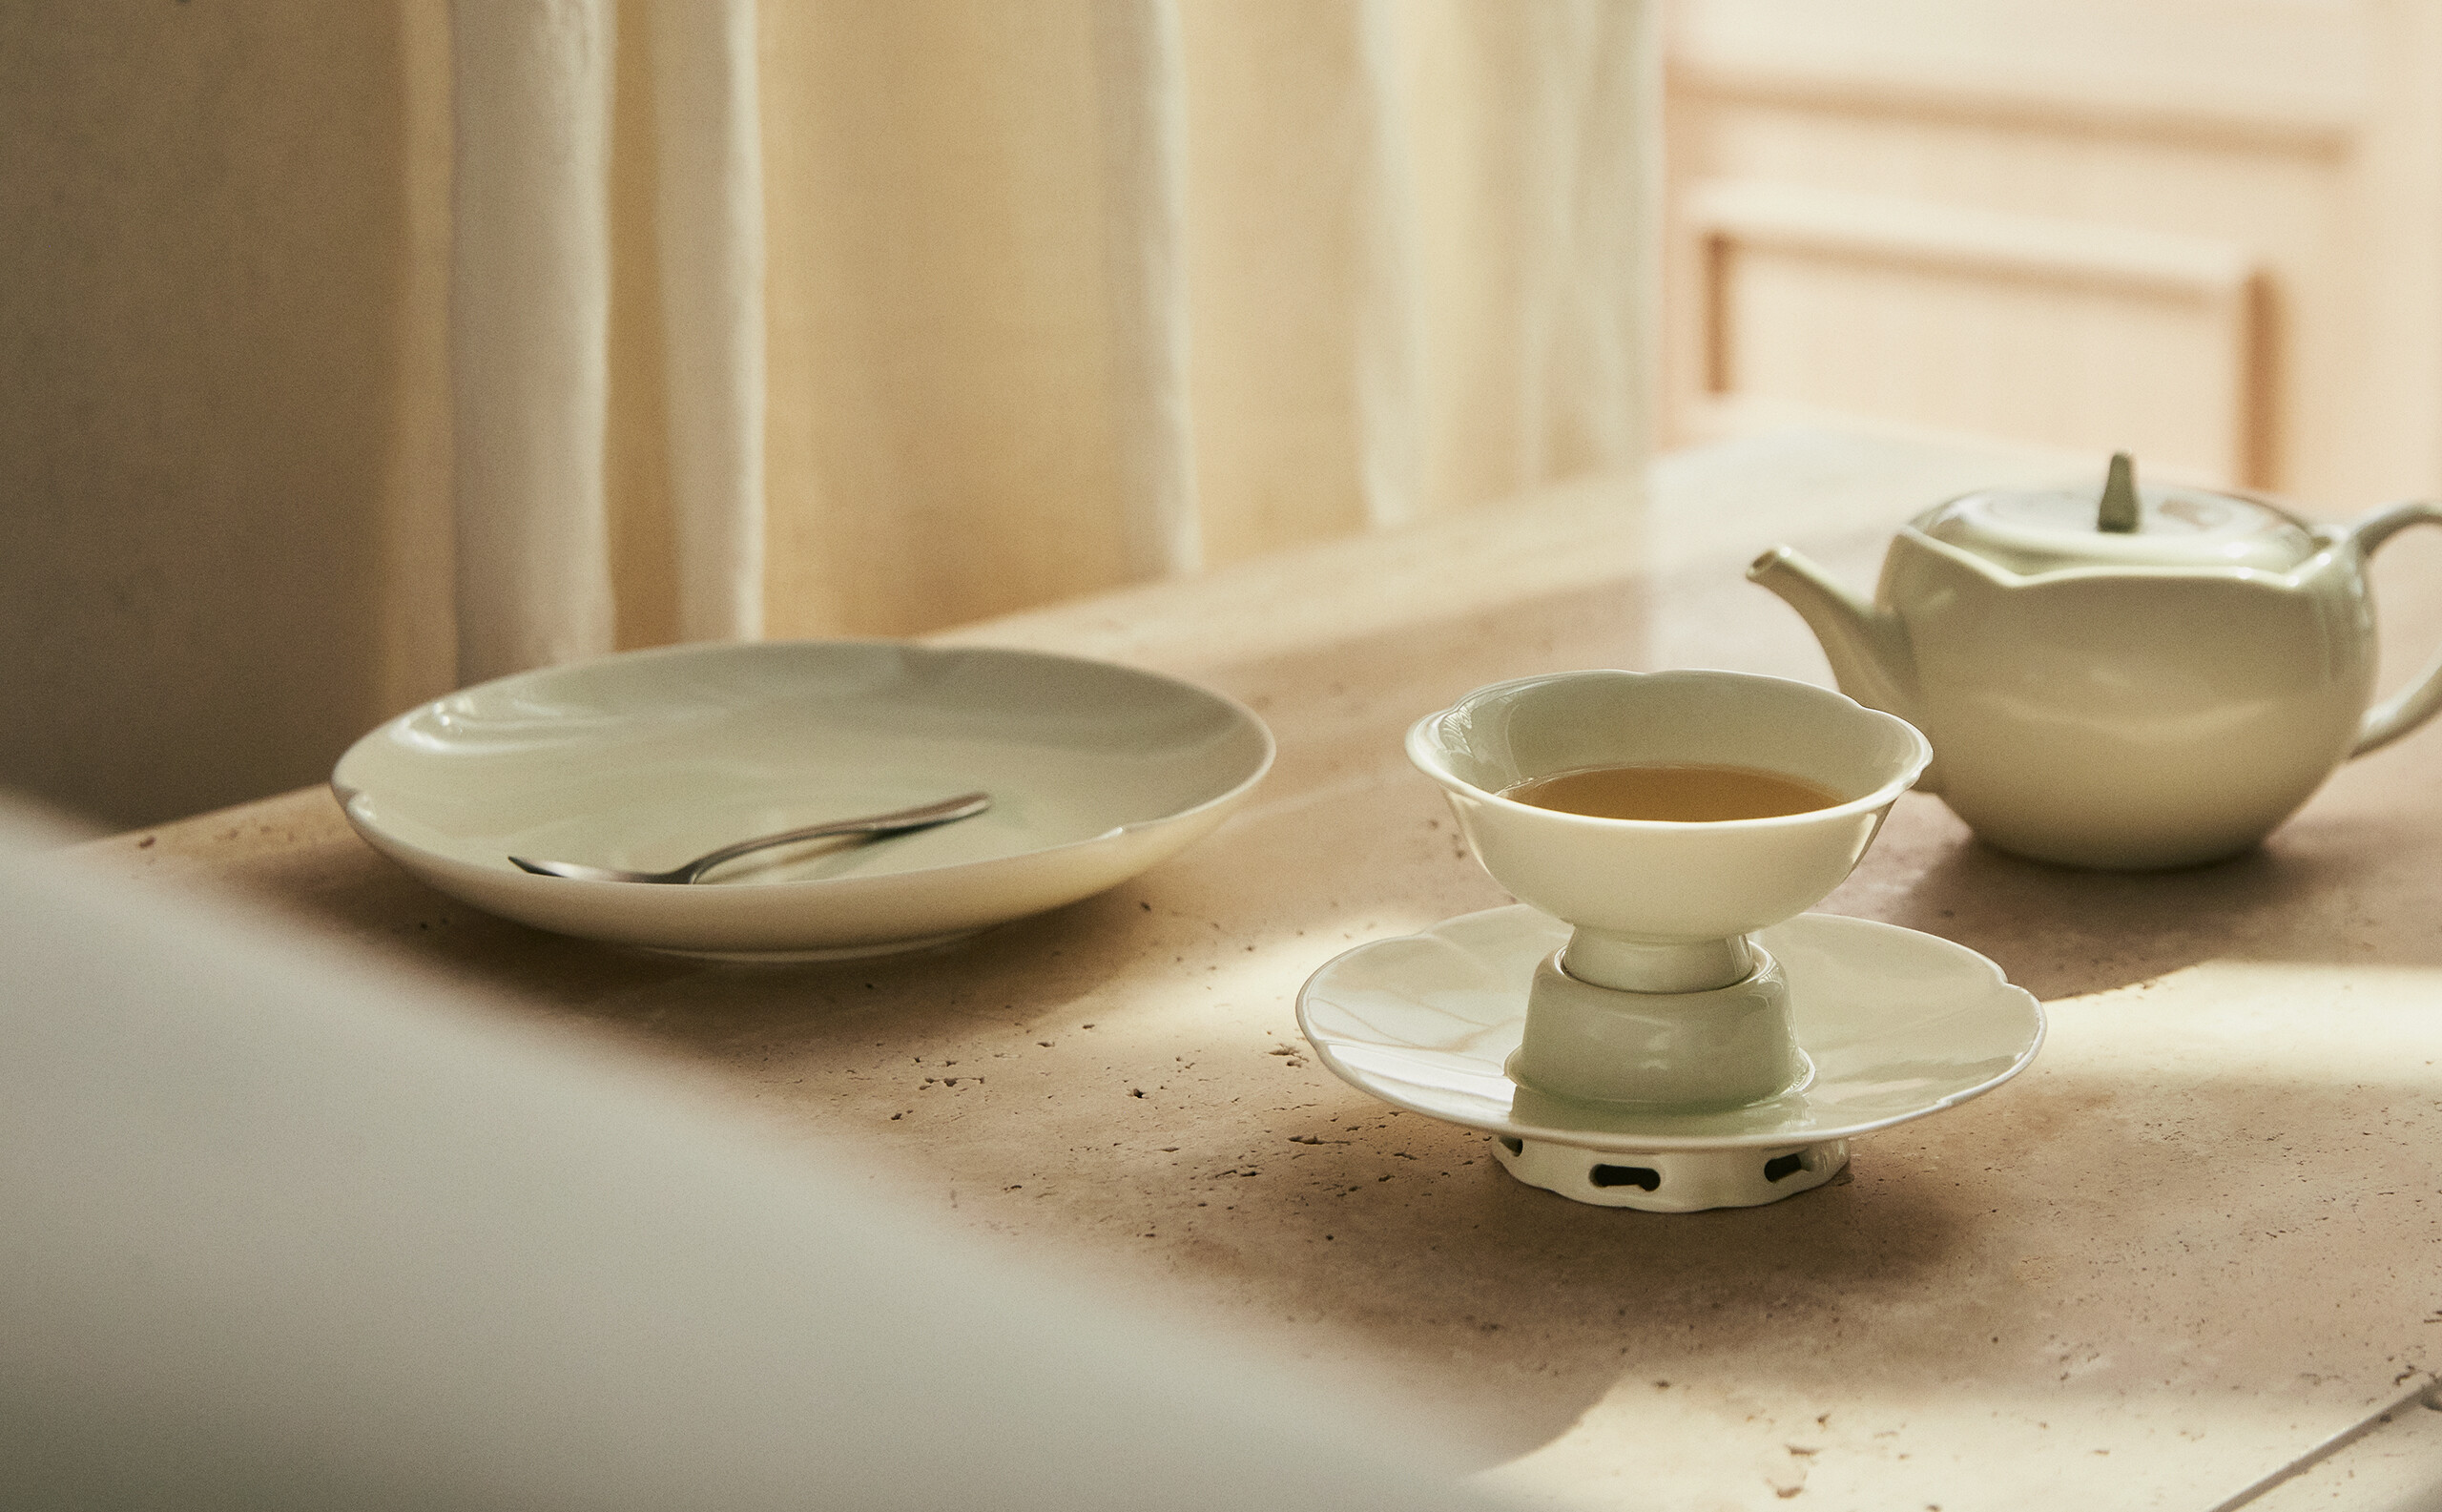 Tableware set - DINING - TABLEWARE | Zara Home Taiwan, China / 中国台湾